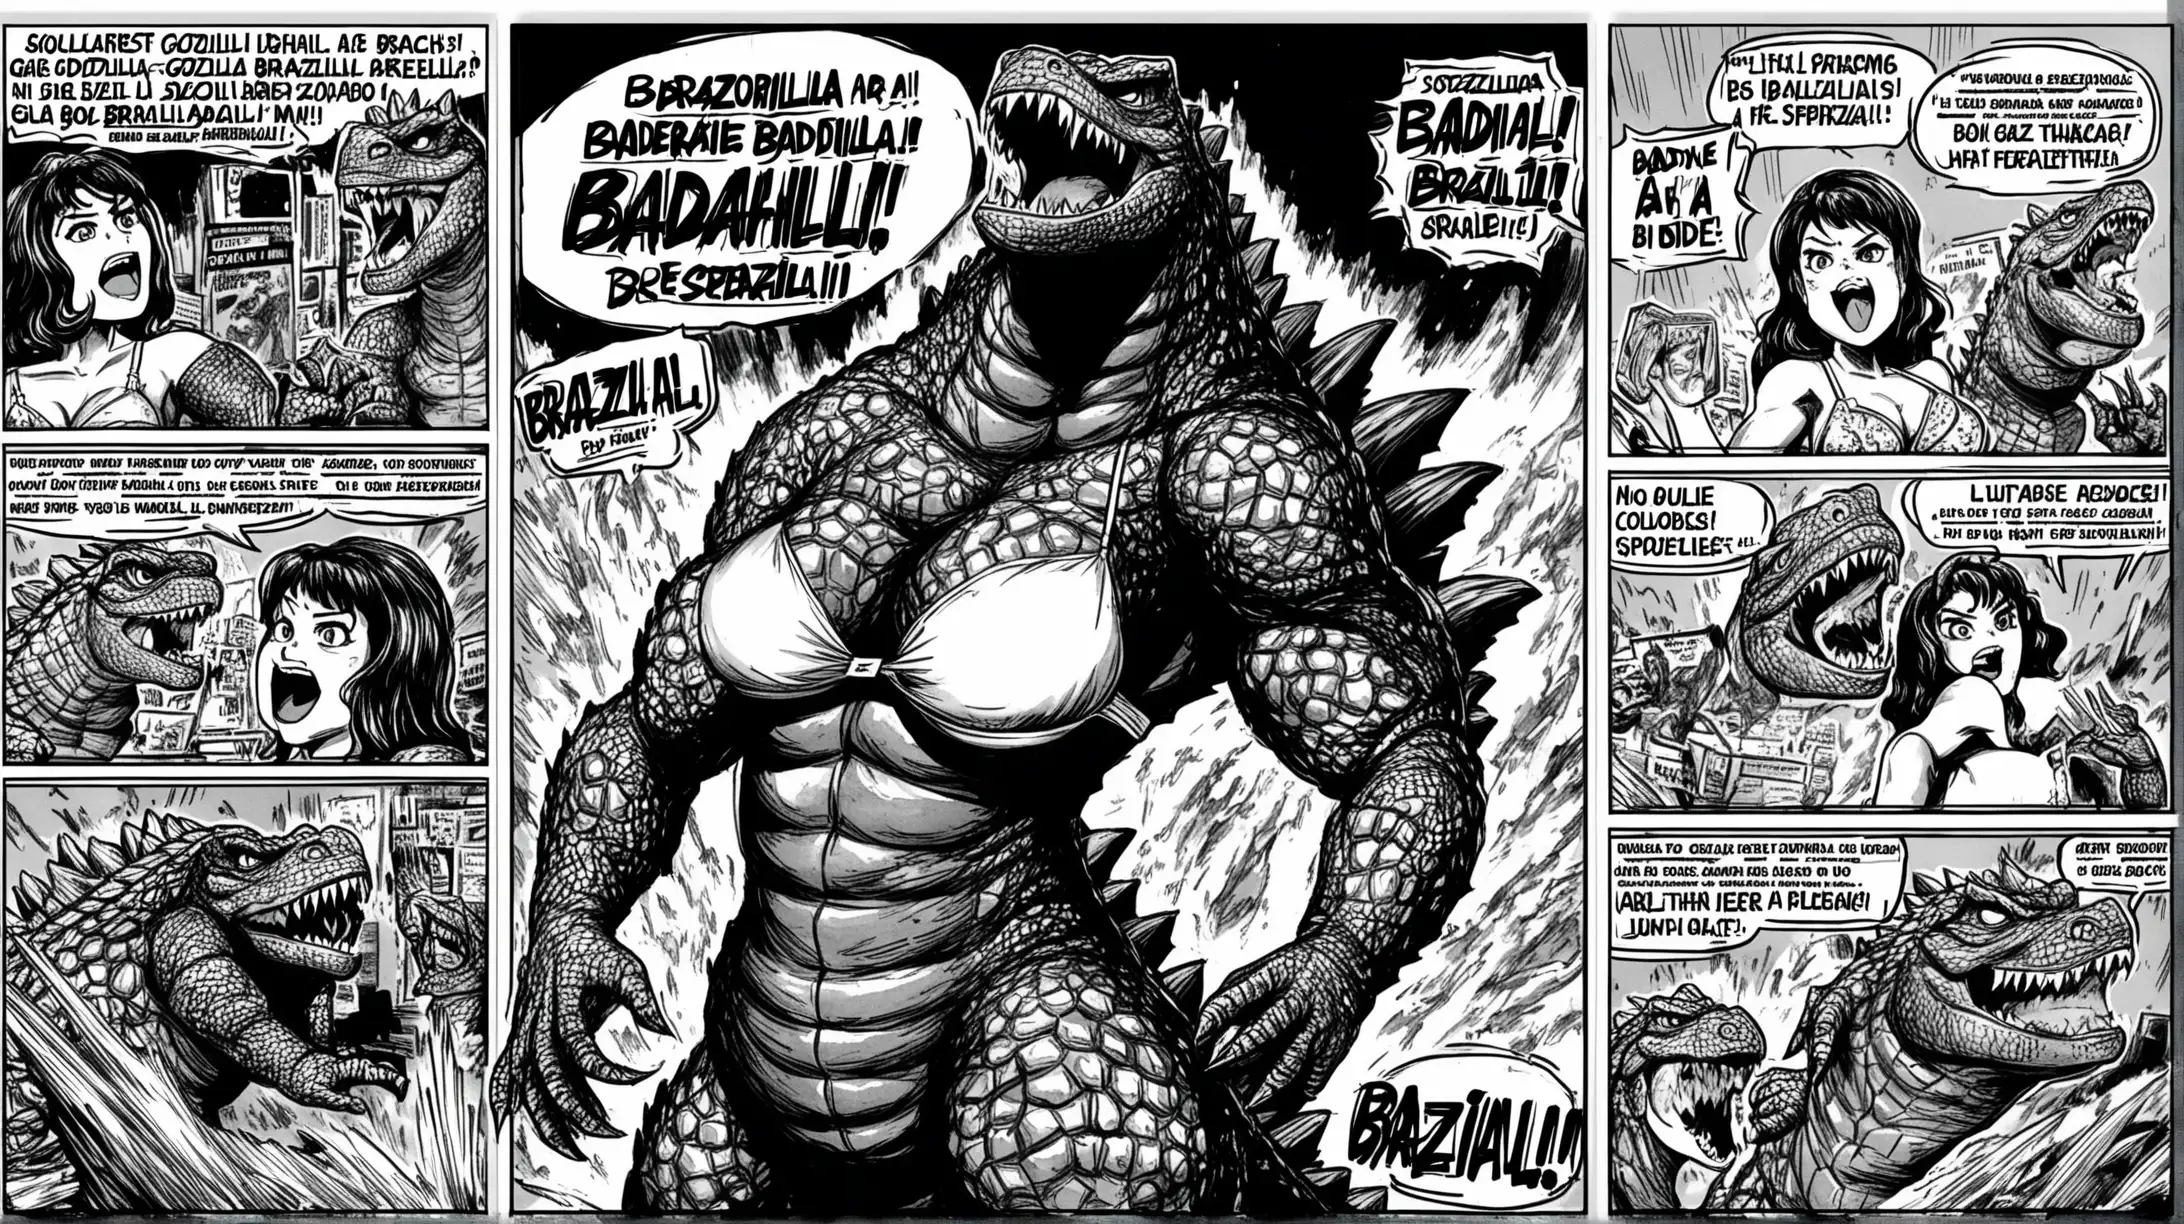 godzilla wearing a bra, speach: baddie!!!, title: brazillai, style: comic book, colour: black and white